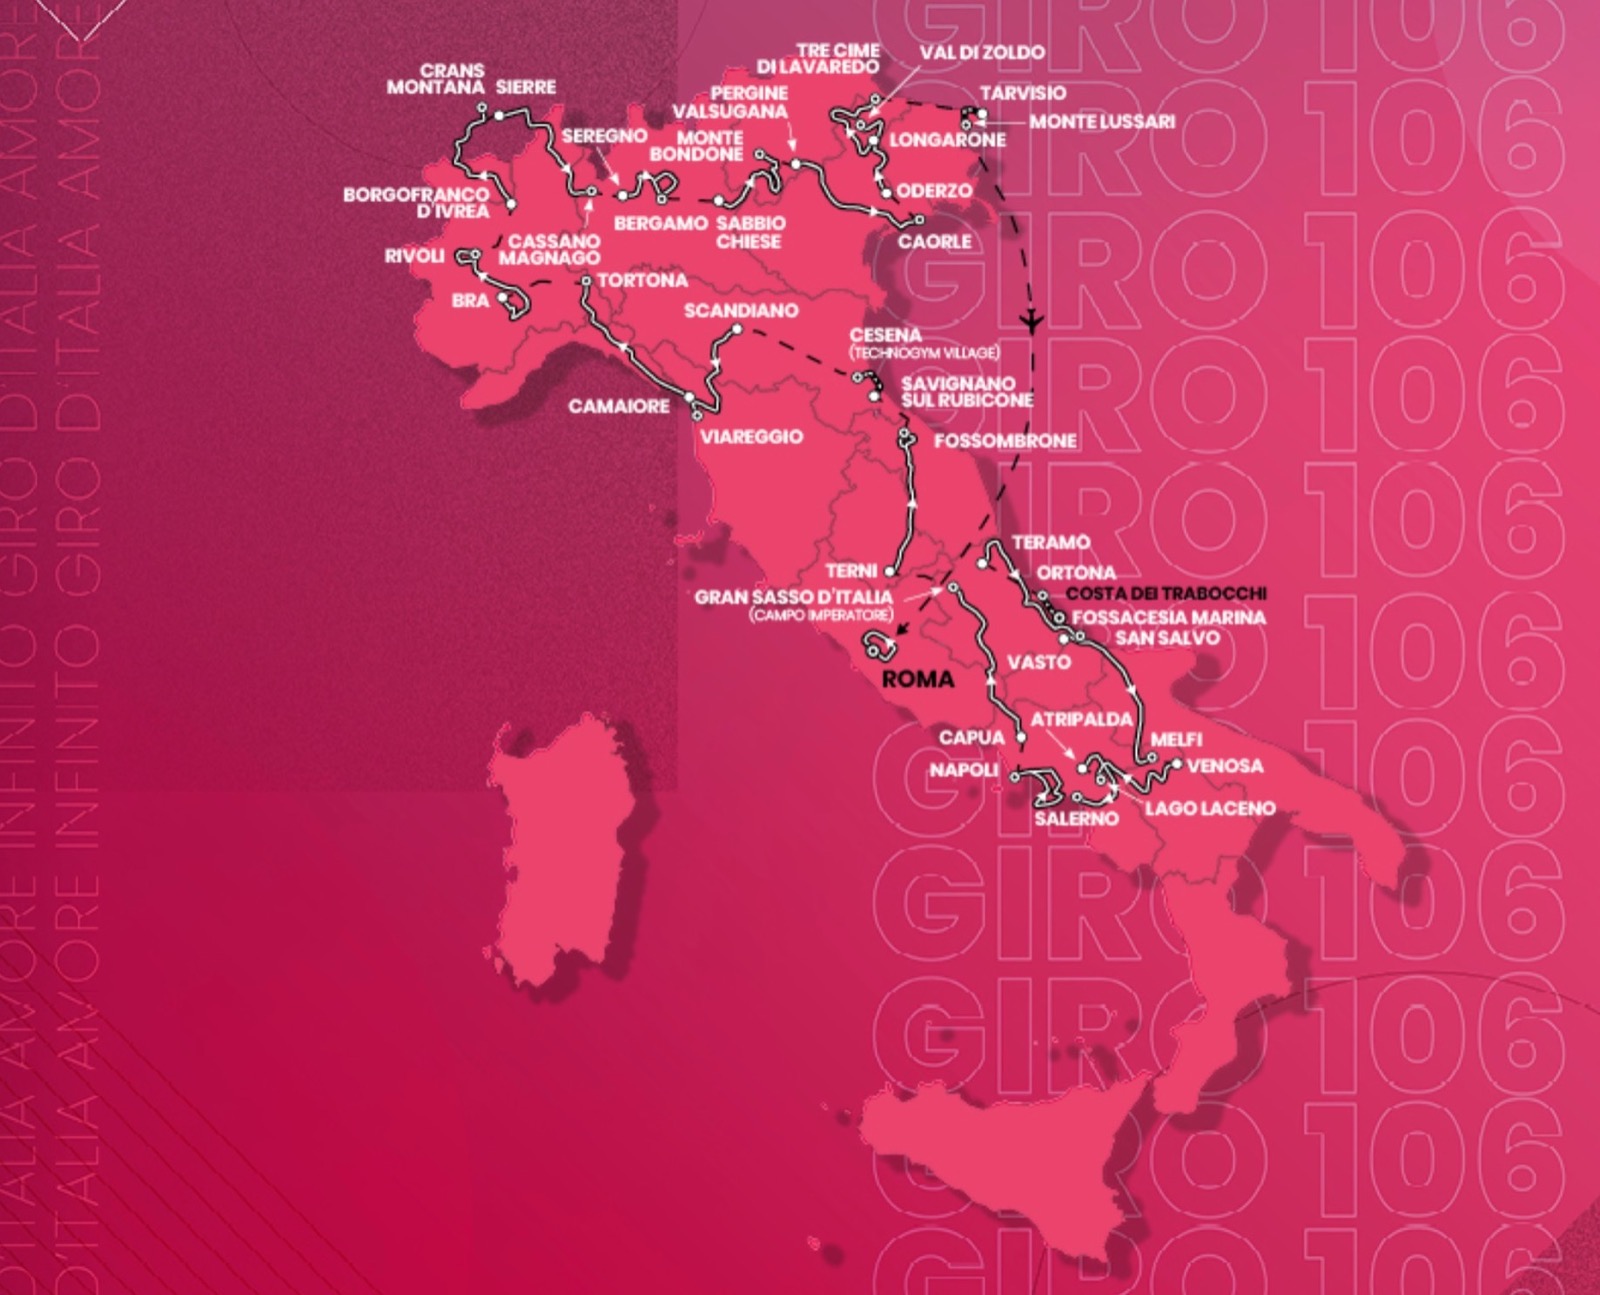 Giro d’Italia, come seguirlo tra TV, app e streaming